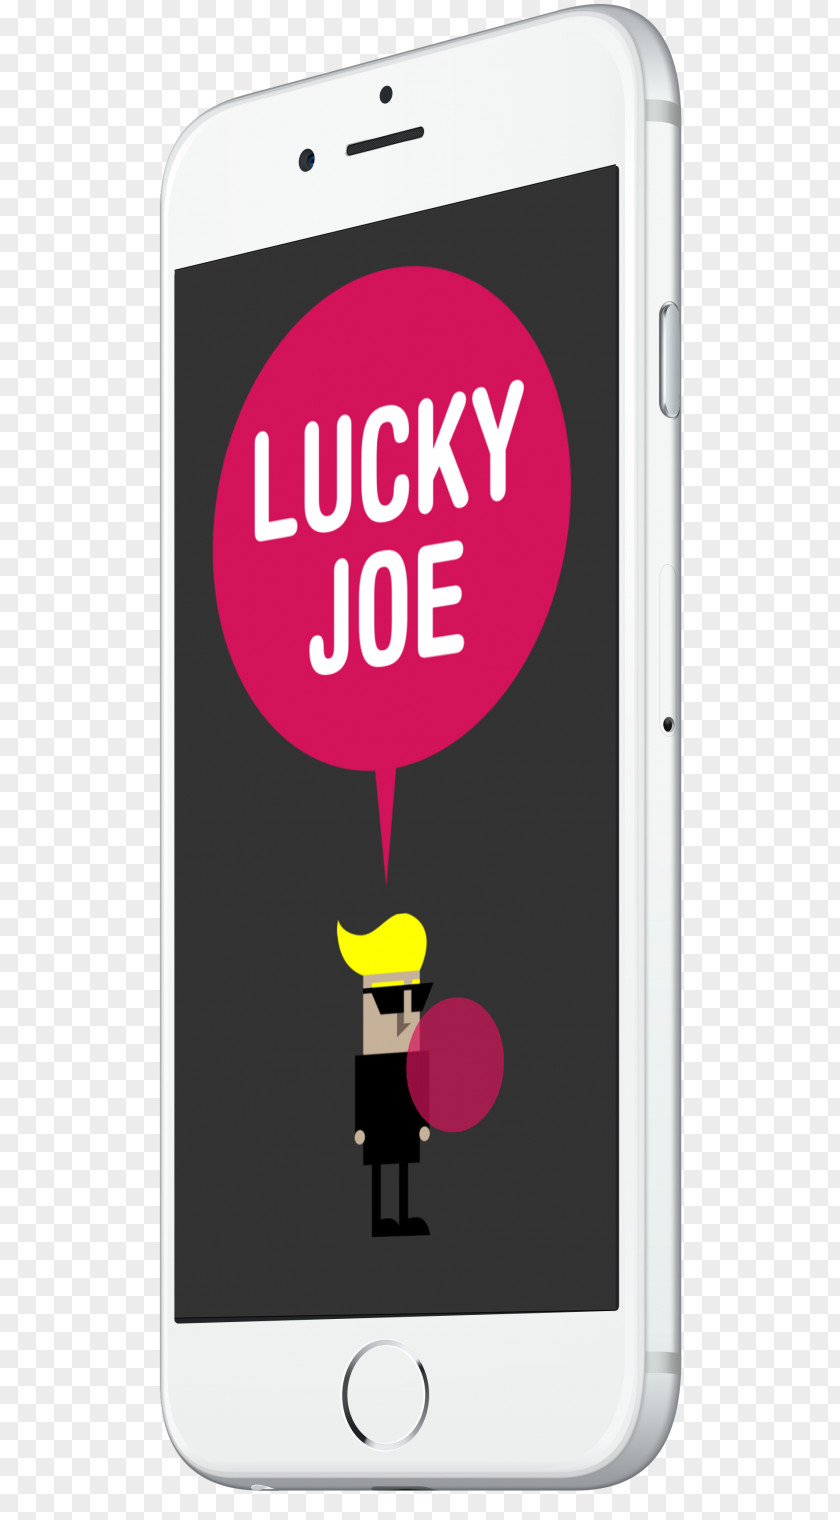 Mobile Games Lucky Joe Hoy Te Debo La Vida Phone Accessories App Store PNG